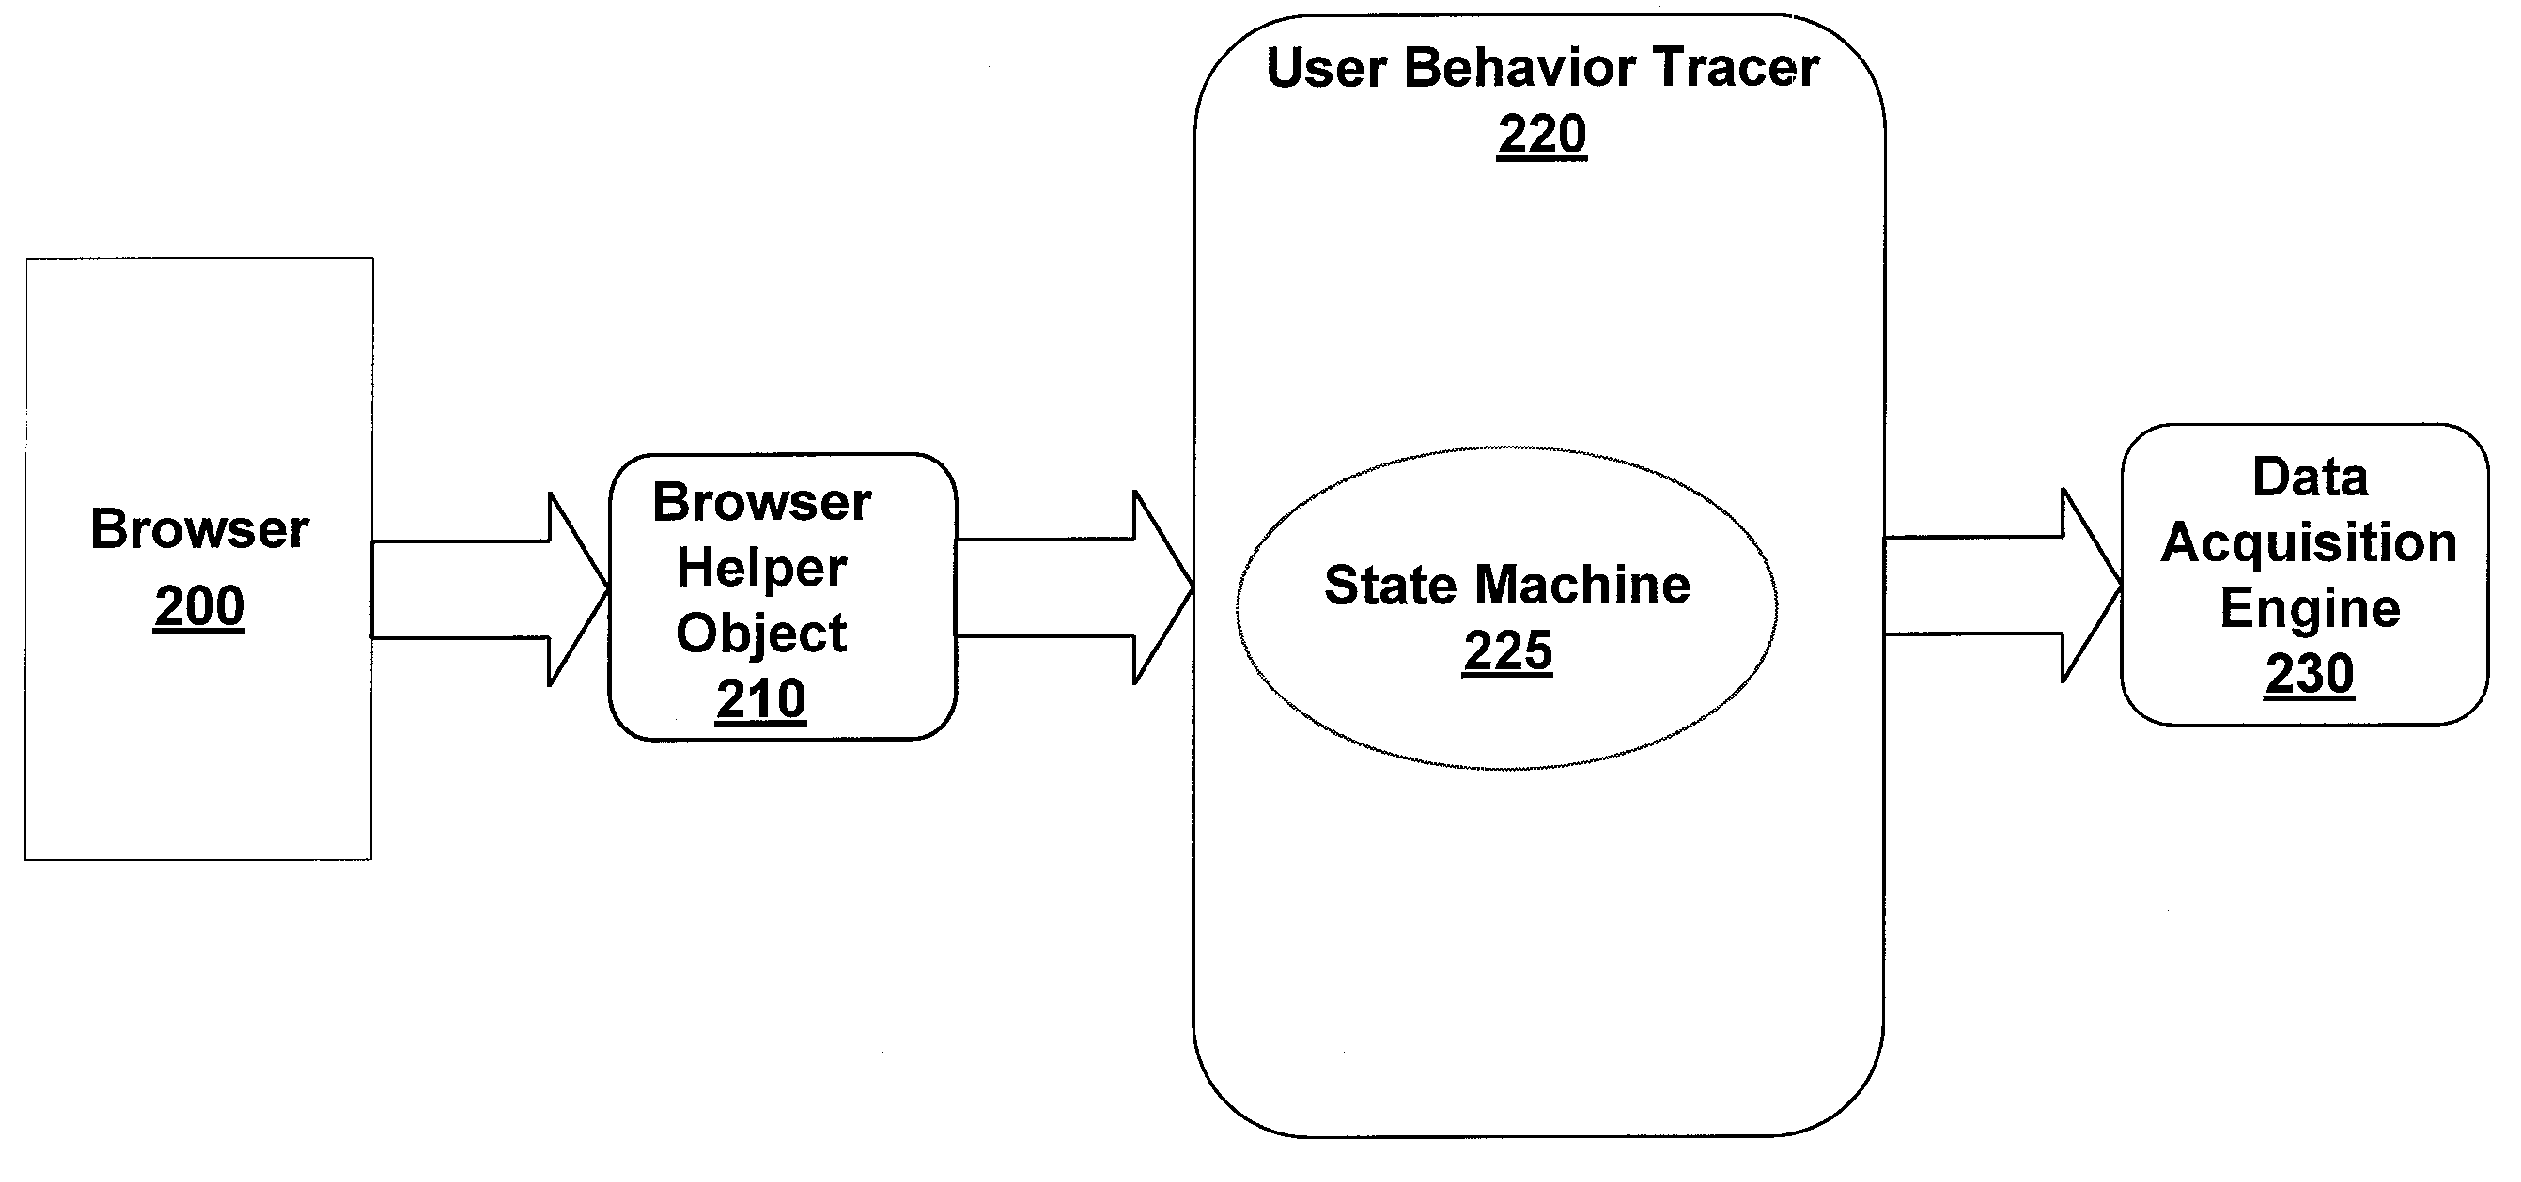 Search system using user behavior data